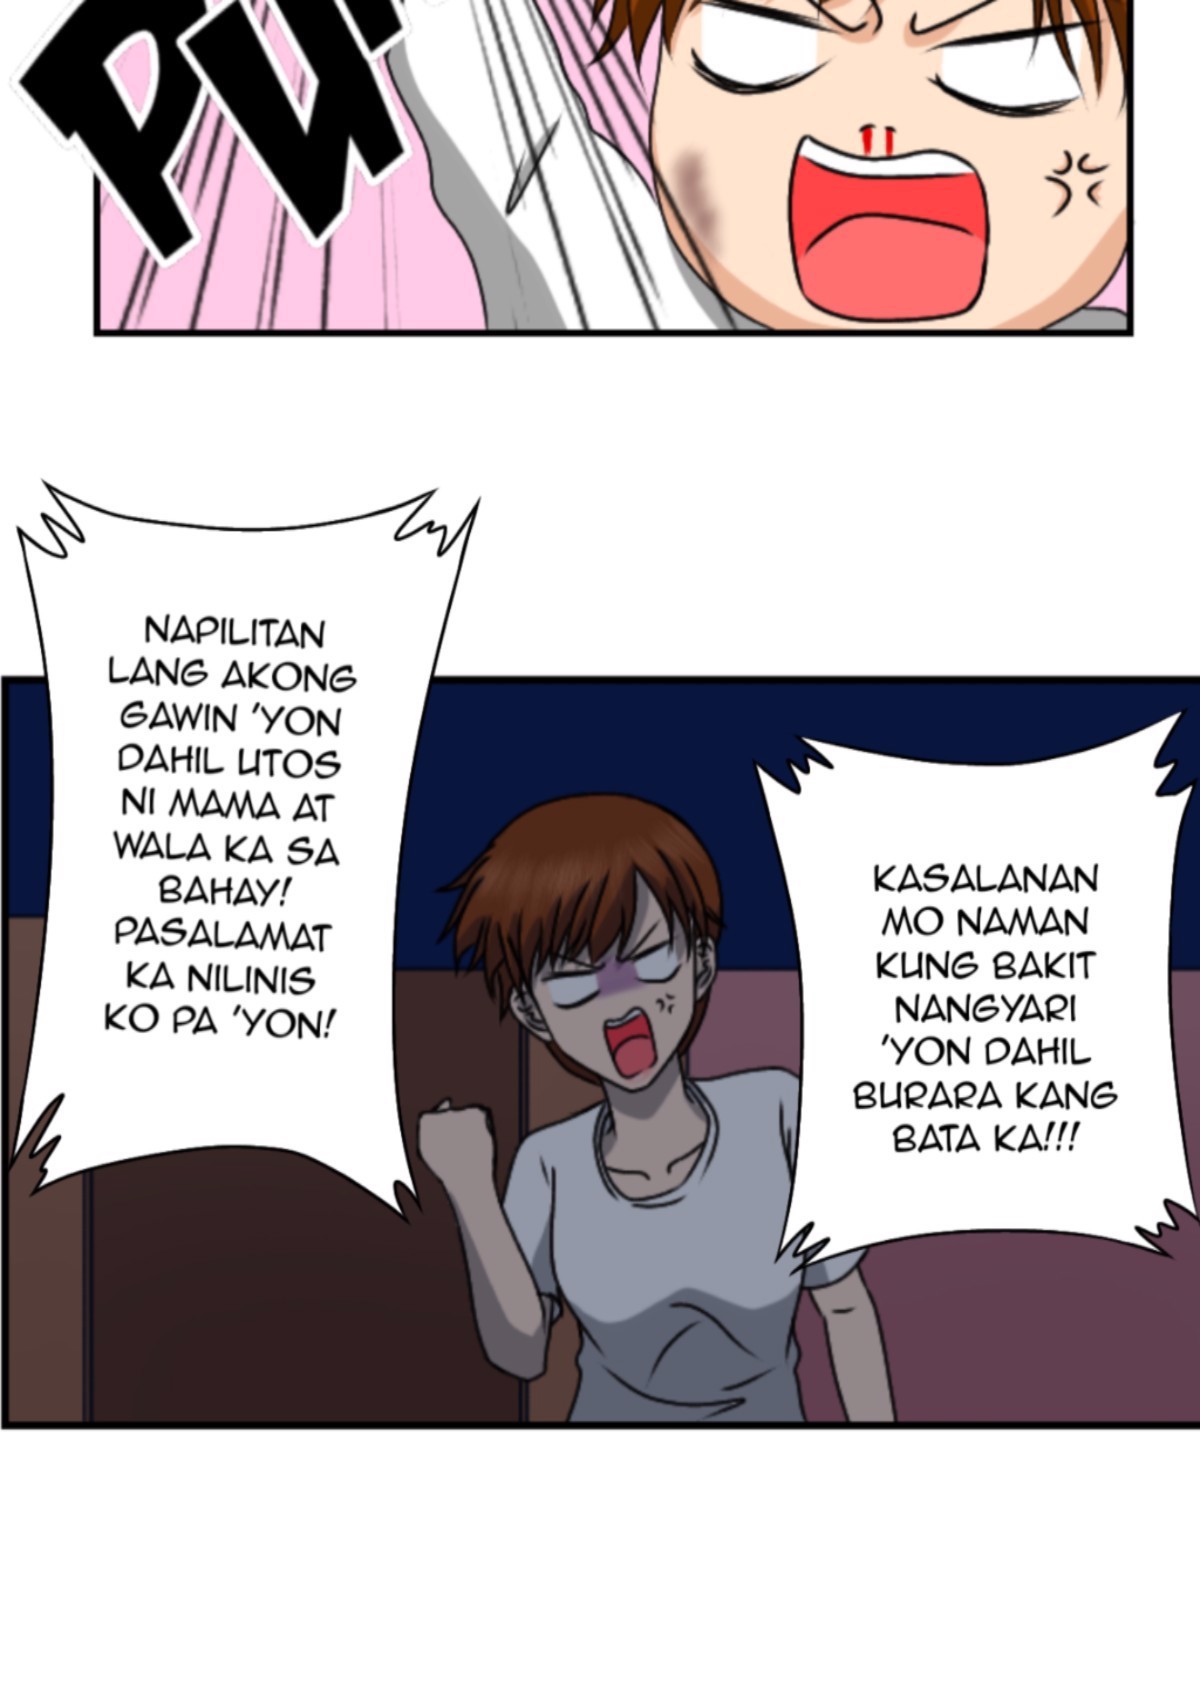 My family | How can I win her heart? | WebKom Pinoy Komiks